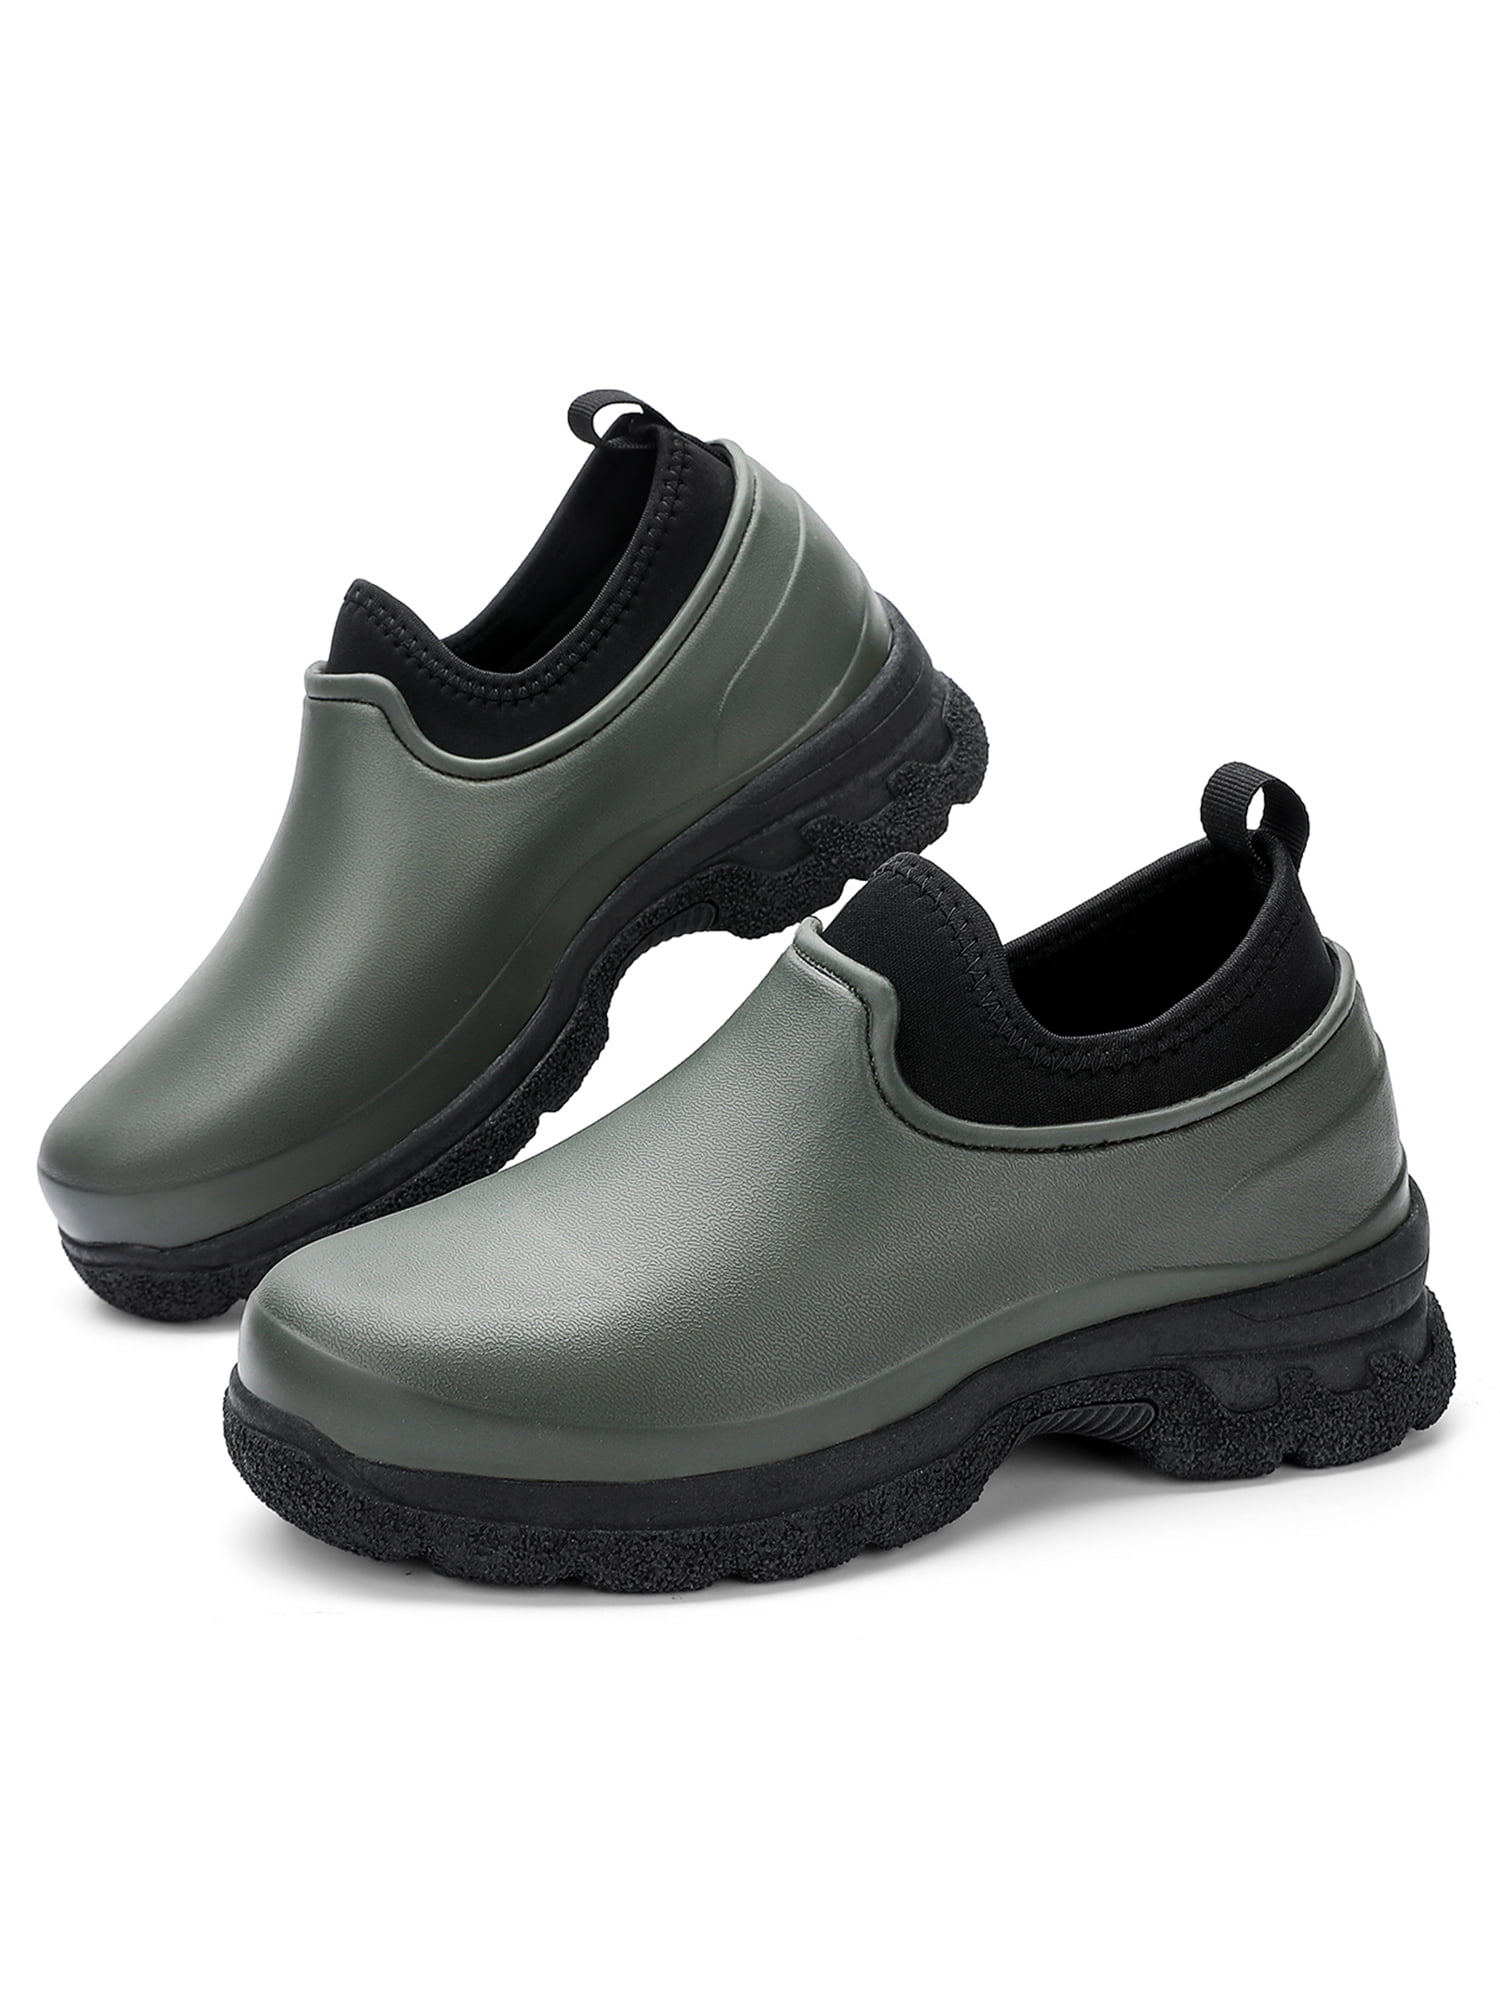 Rosmall Water Shoes Slip-on Rain Shoes Men Waterproof Non-slip Booties  Autumn Winter Warm Kitchen Work Fishing Rain Boots Fashion Galoshes Men ( Shoe Size : 42) price in UAE,  UAE